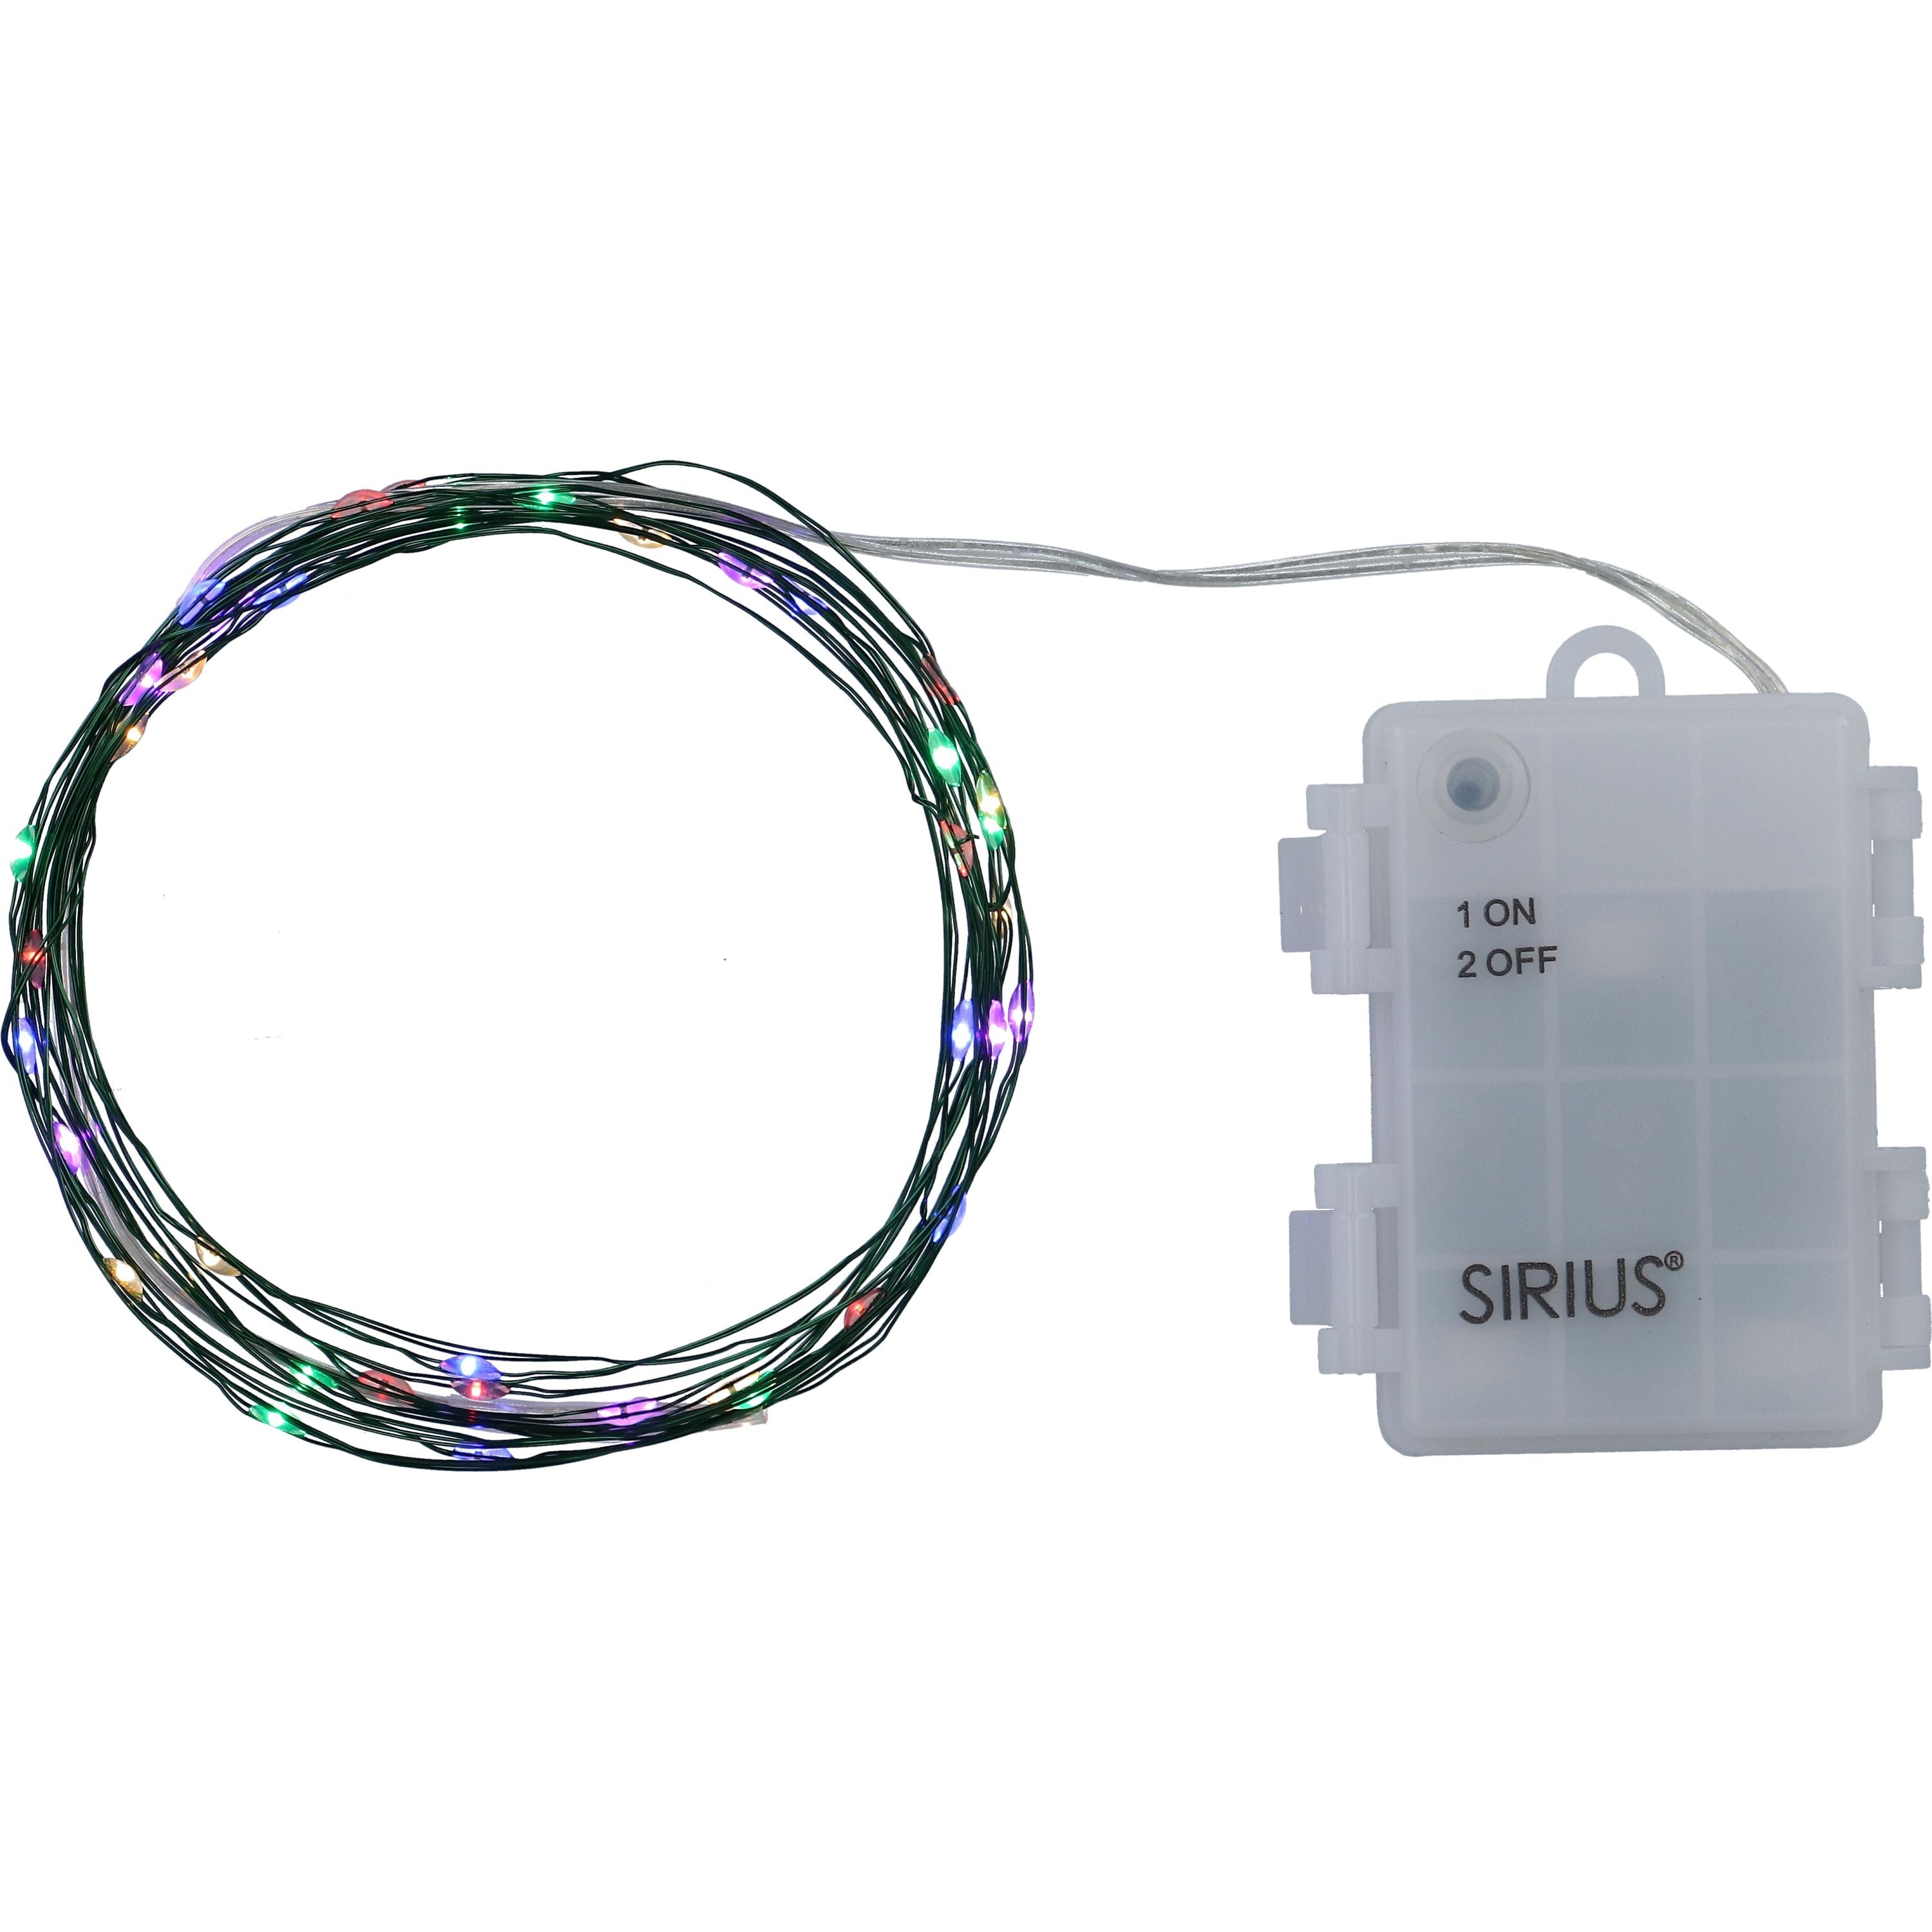 Sirius Knirke Light Chain 40L, Multi/Green